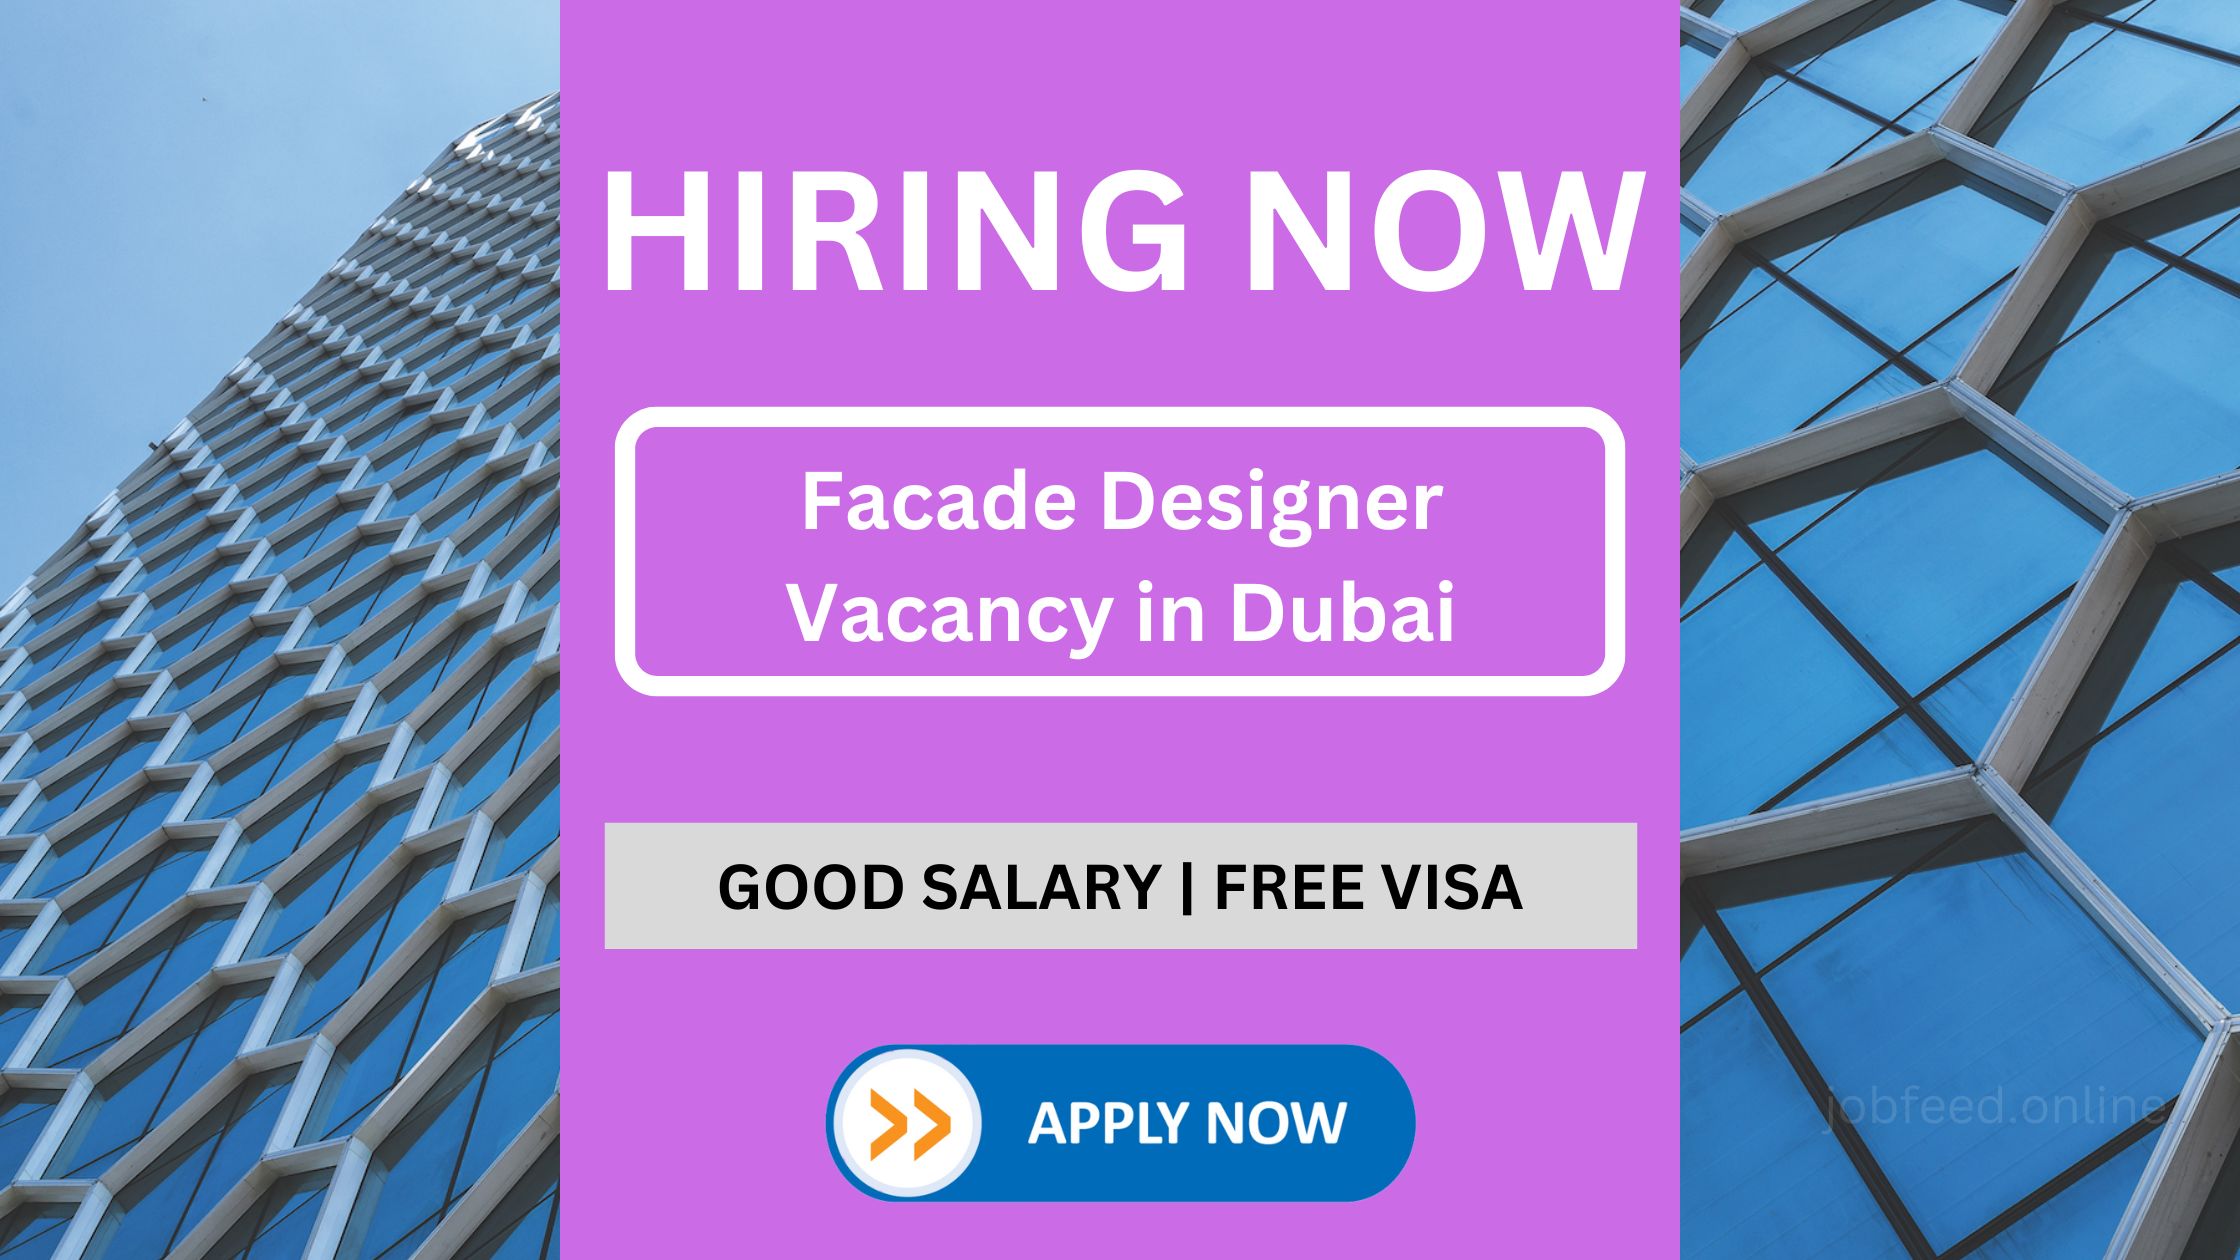 Facade Designer Vacancy in Dubai - Immediate Join